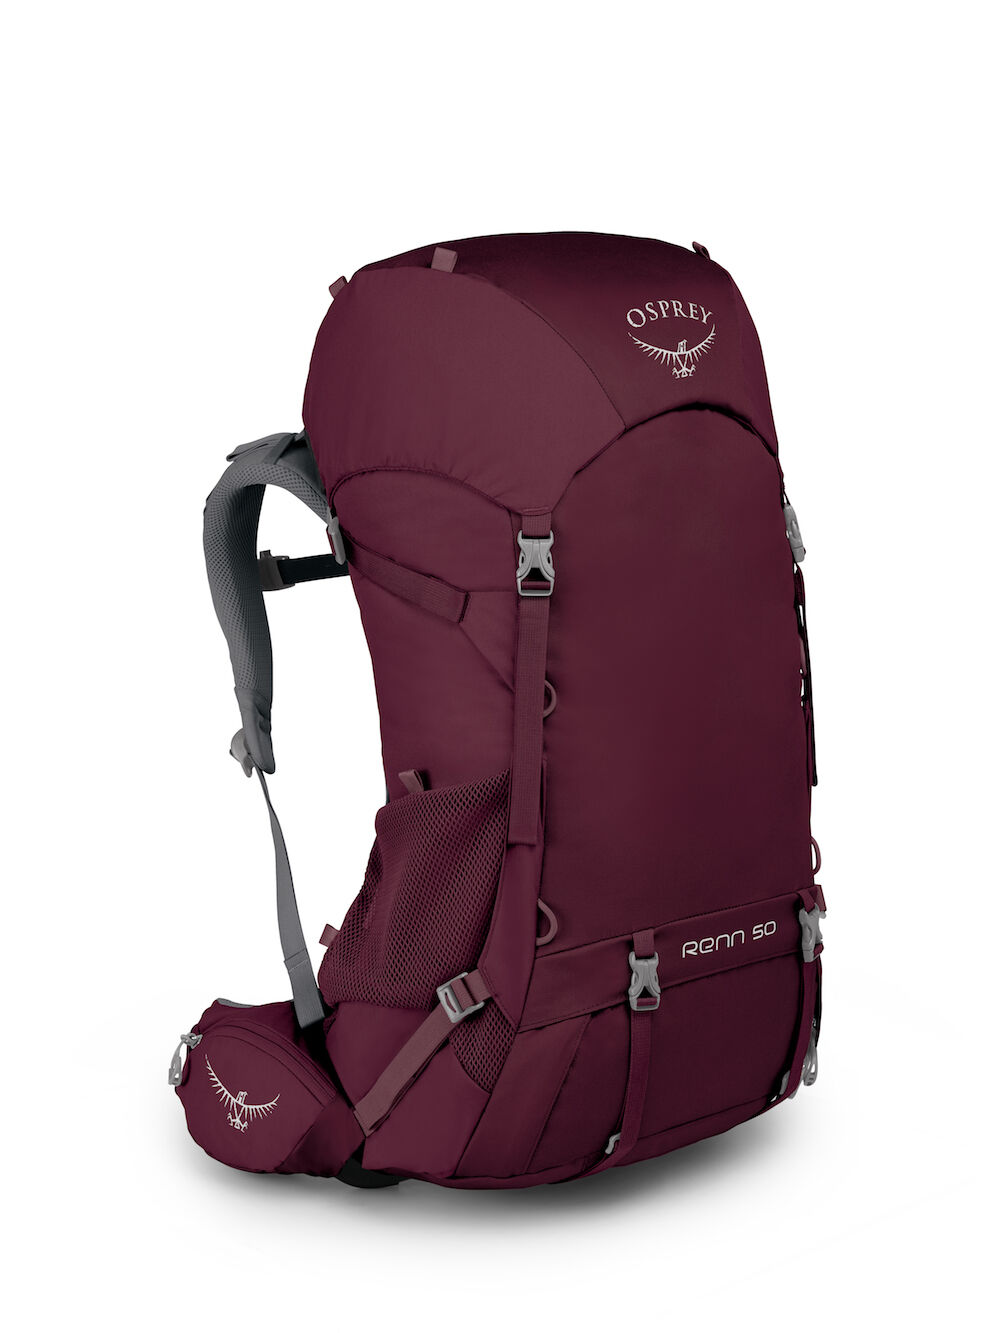 Osprey Renn 50 - Hiking backpack - Women's